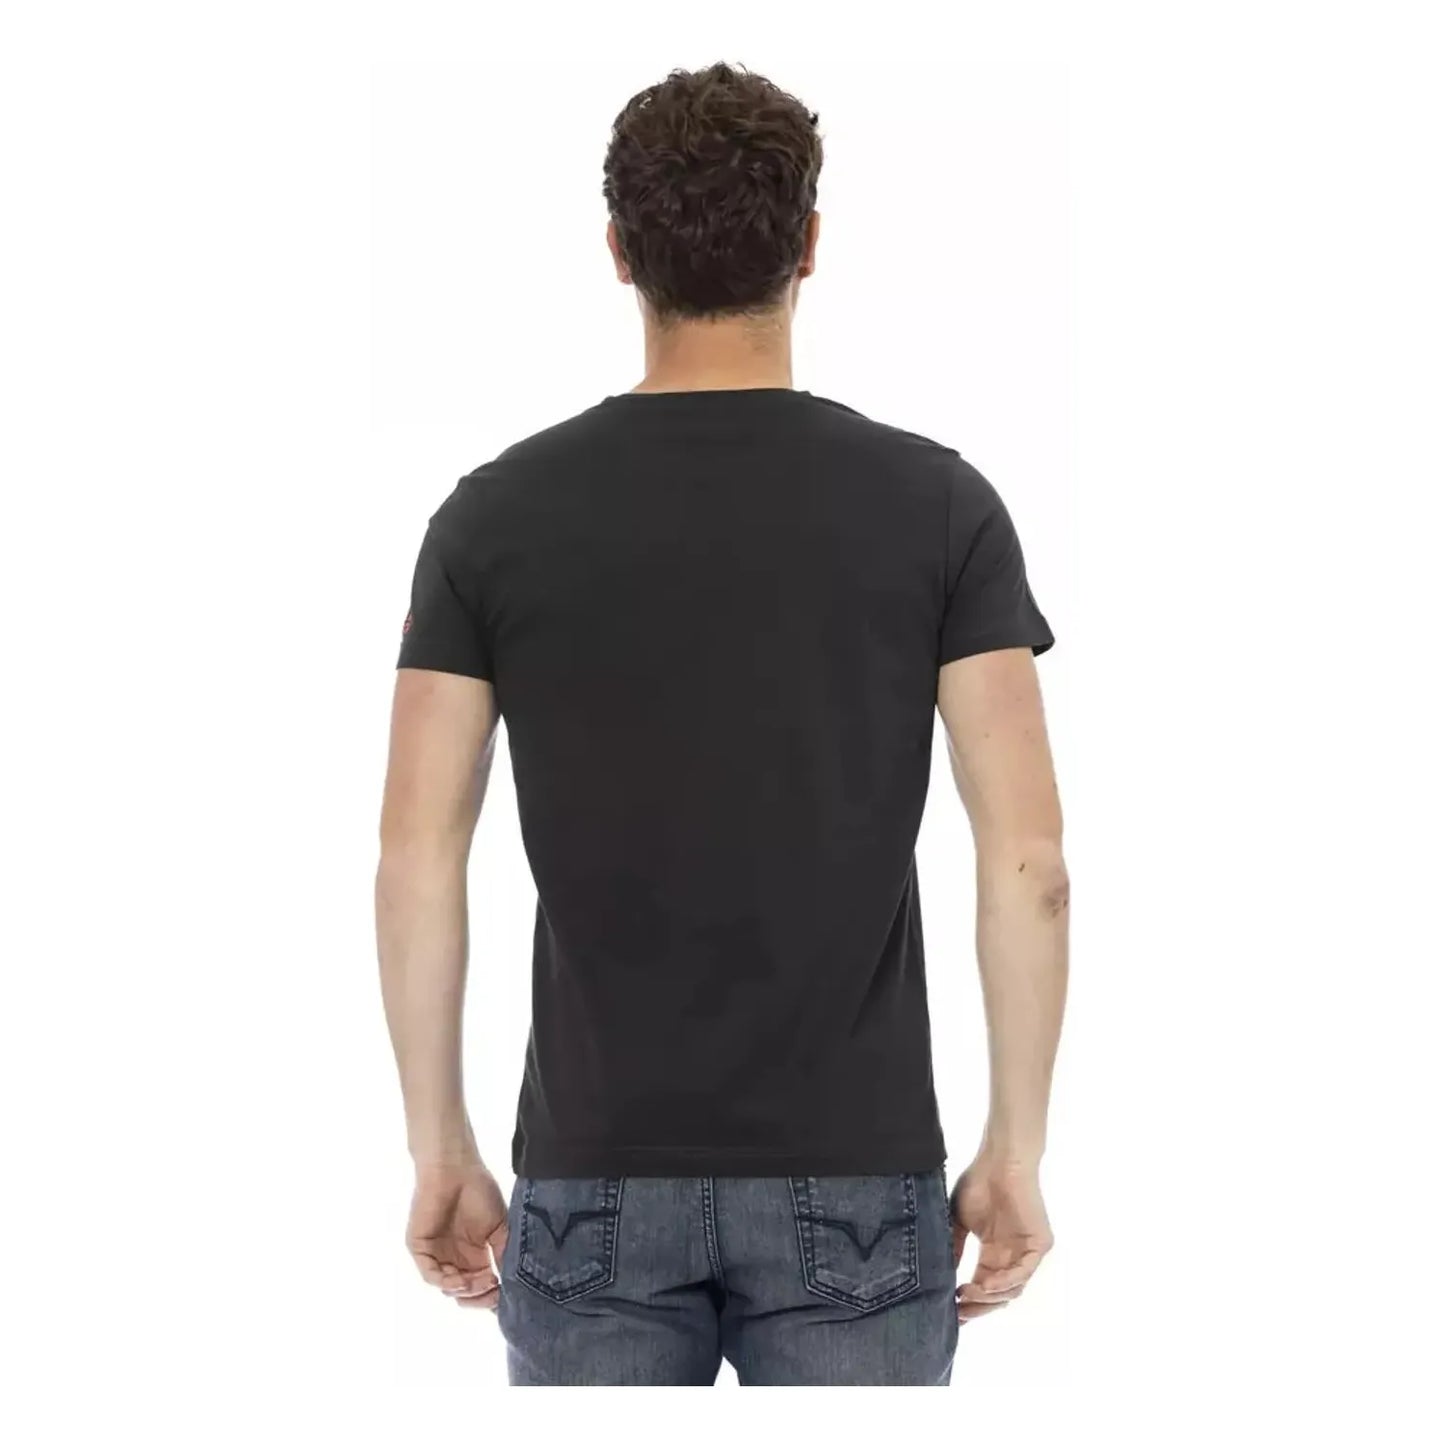 Trussardi Action Sleek Round Neck Tee With Chic Front Print black-cotton-t-shirt-56